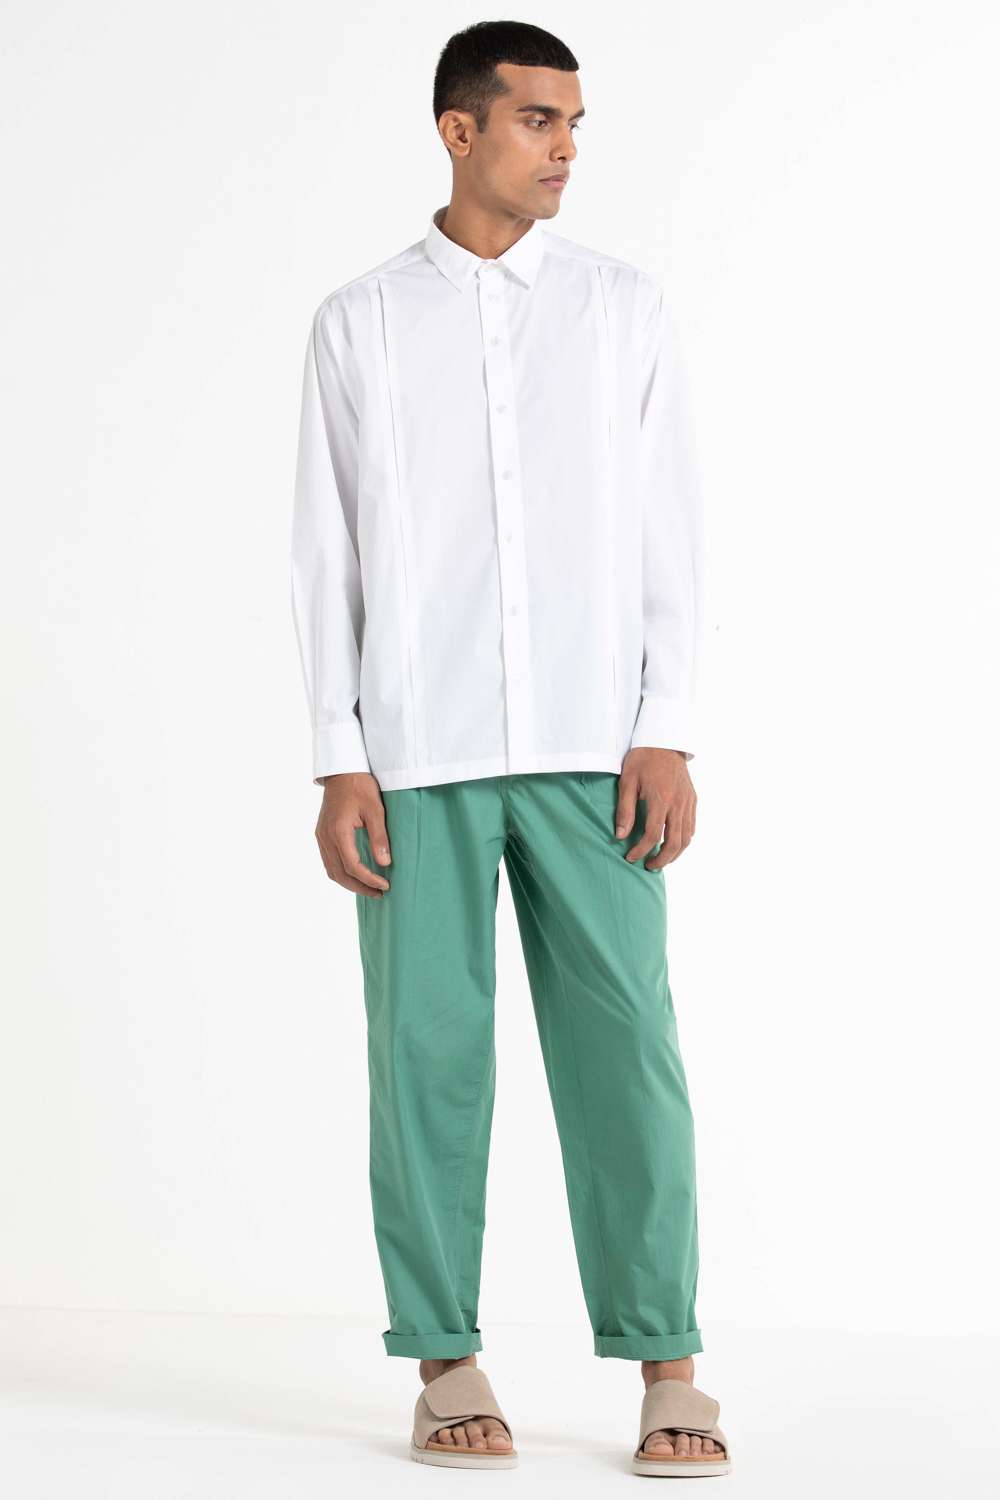 white luxury Slim Fit Men Light Green Trousers  Buy white luxury Slim Fit  Men Light Green Trousers Online at Best Prices in India  Flipkartcom